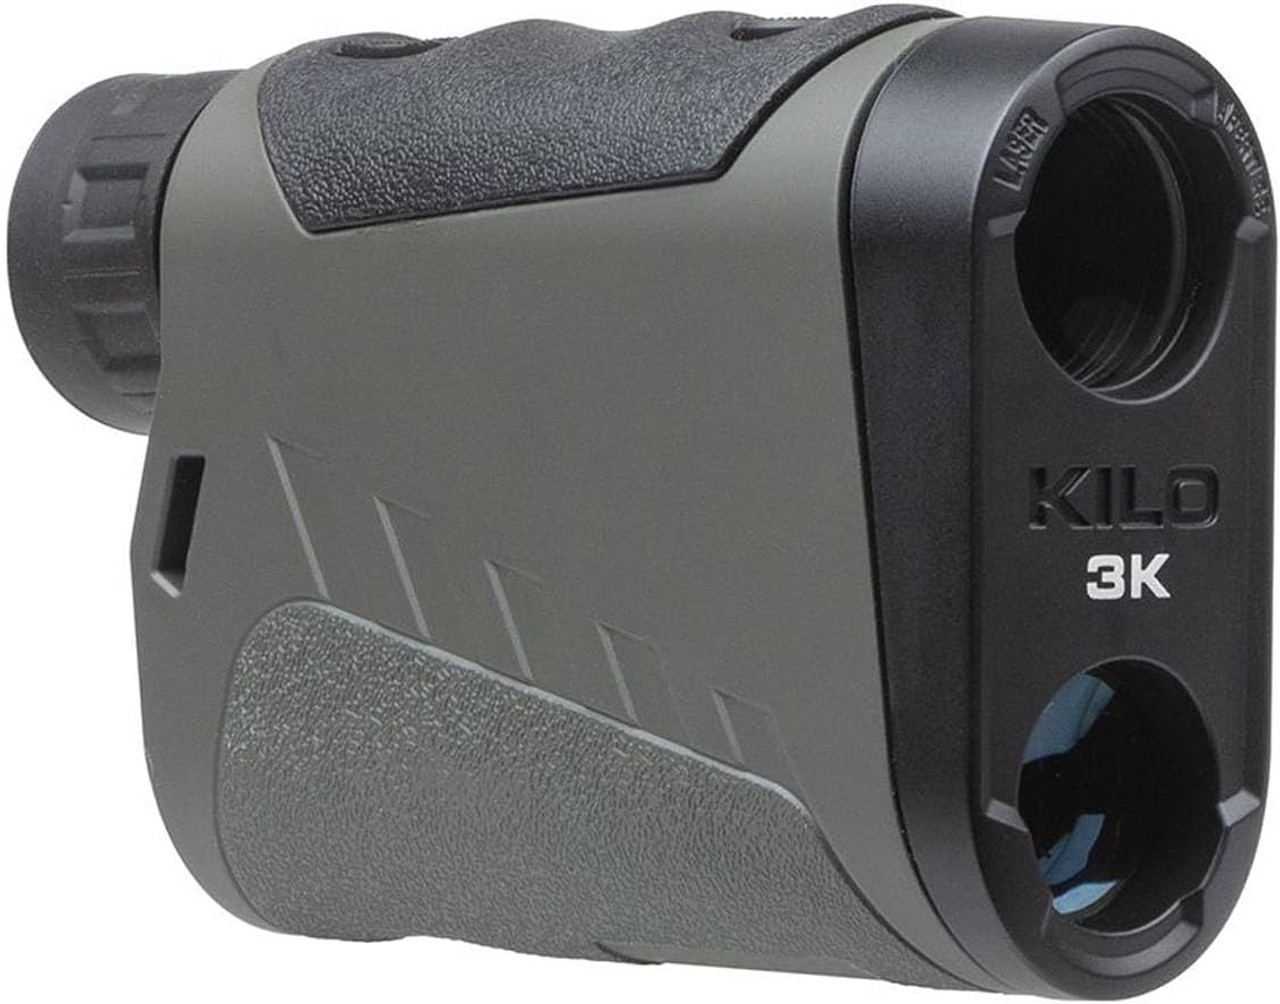 SIG SAUER KILO3K 6X22MM Compact Waterproof Accurate Laser Rangefinder